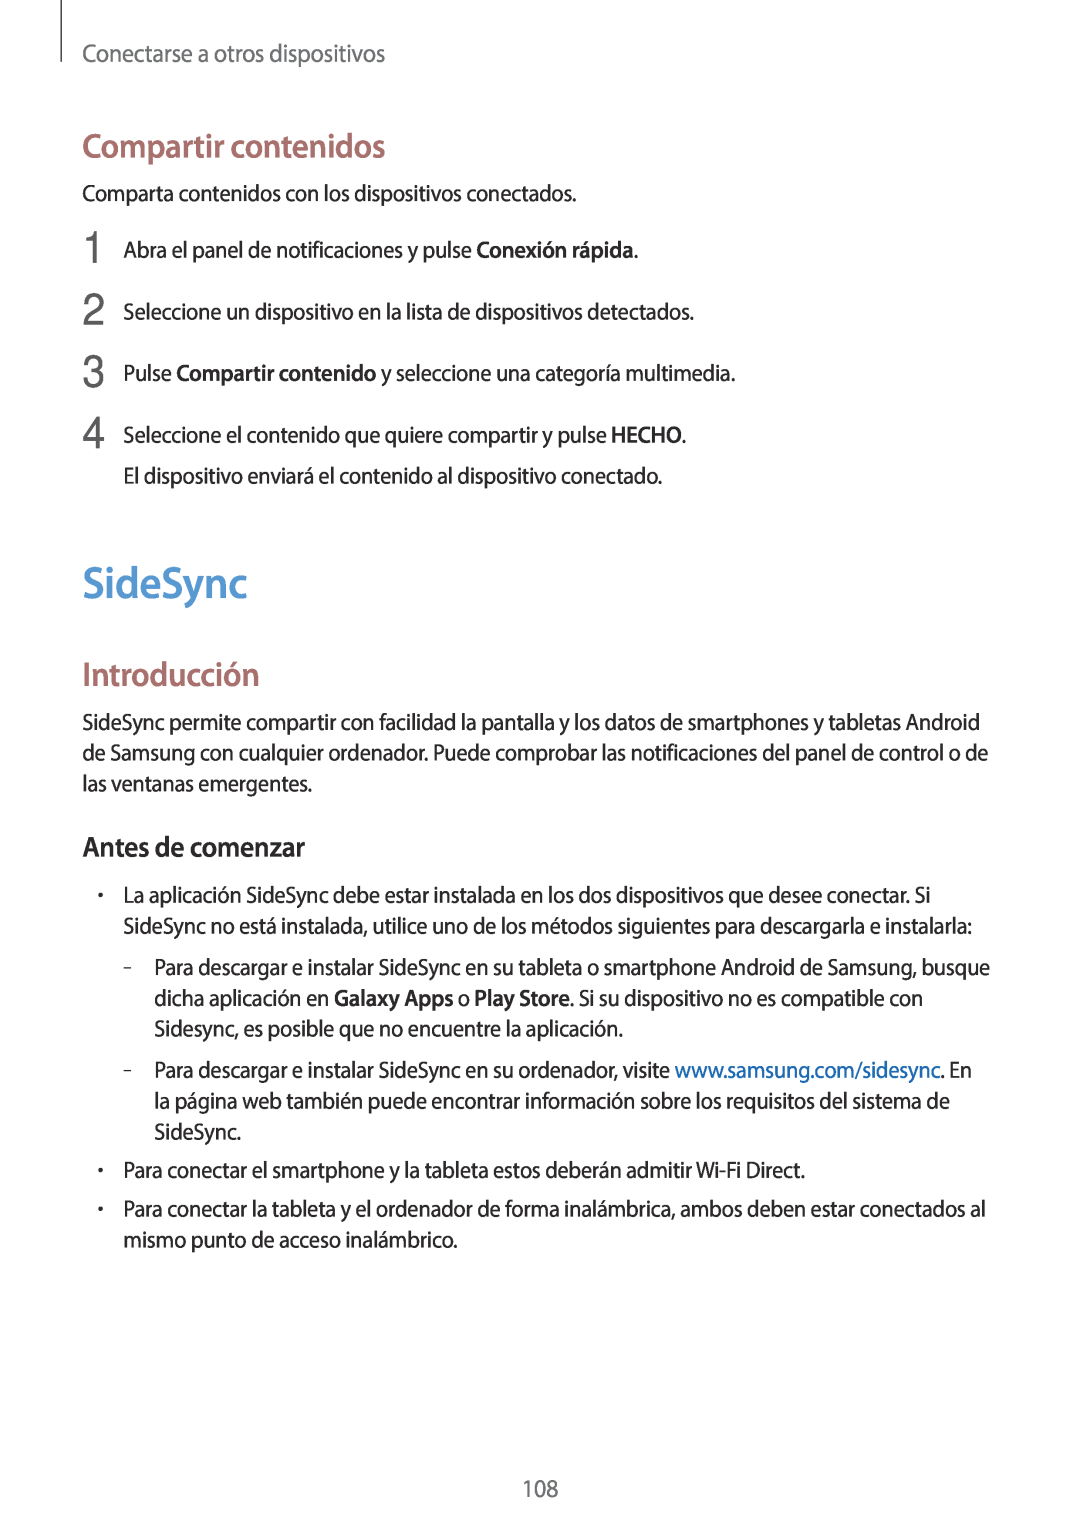 Samsung SM-T800NHAAATO SideSync, Compartir contenidos, Introducción, Antes de comenzar, Conectarse a otros dispositivos 